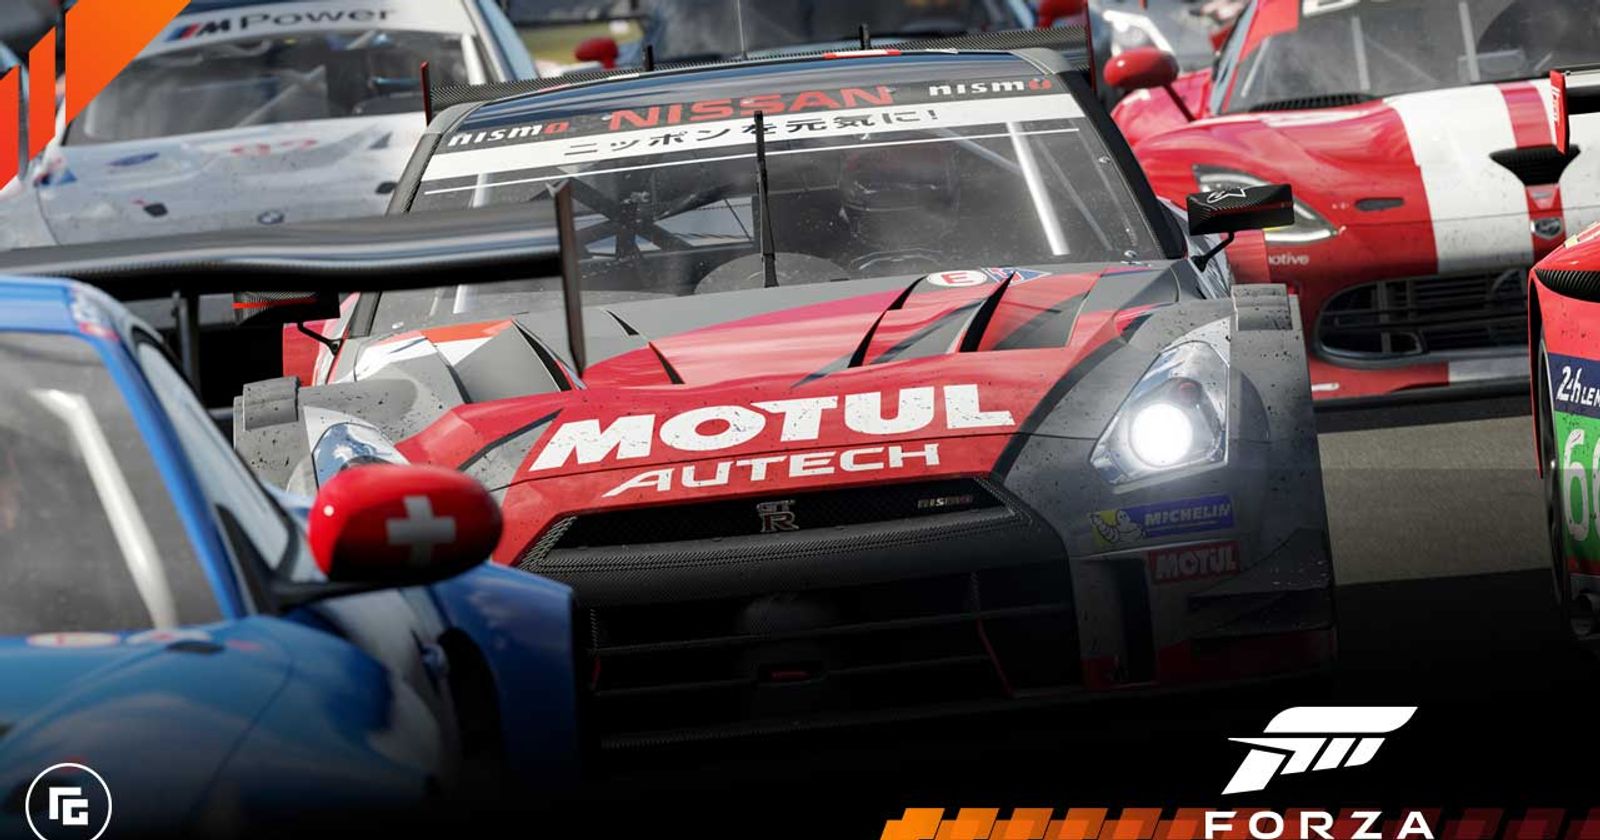 Forza Motorsport VS Gran Turismo 7, Xbox Series X vs PS5